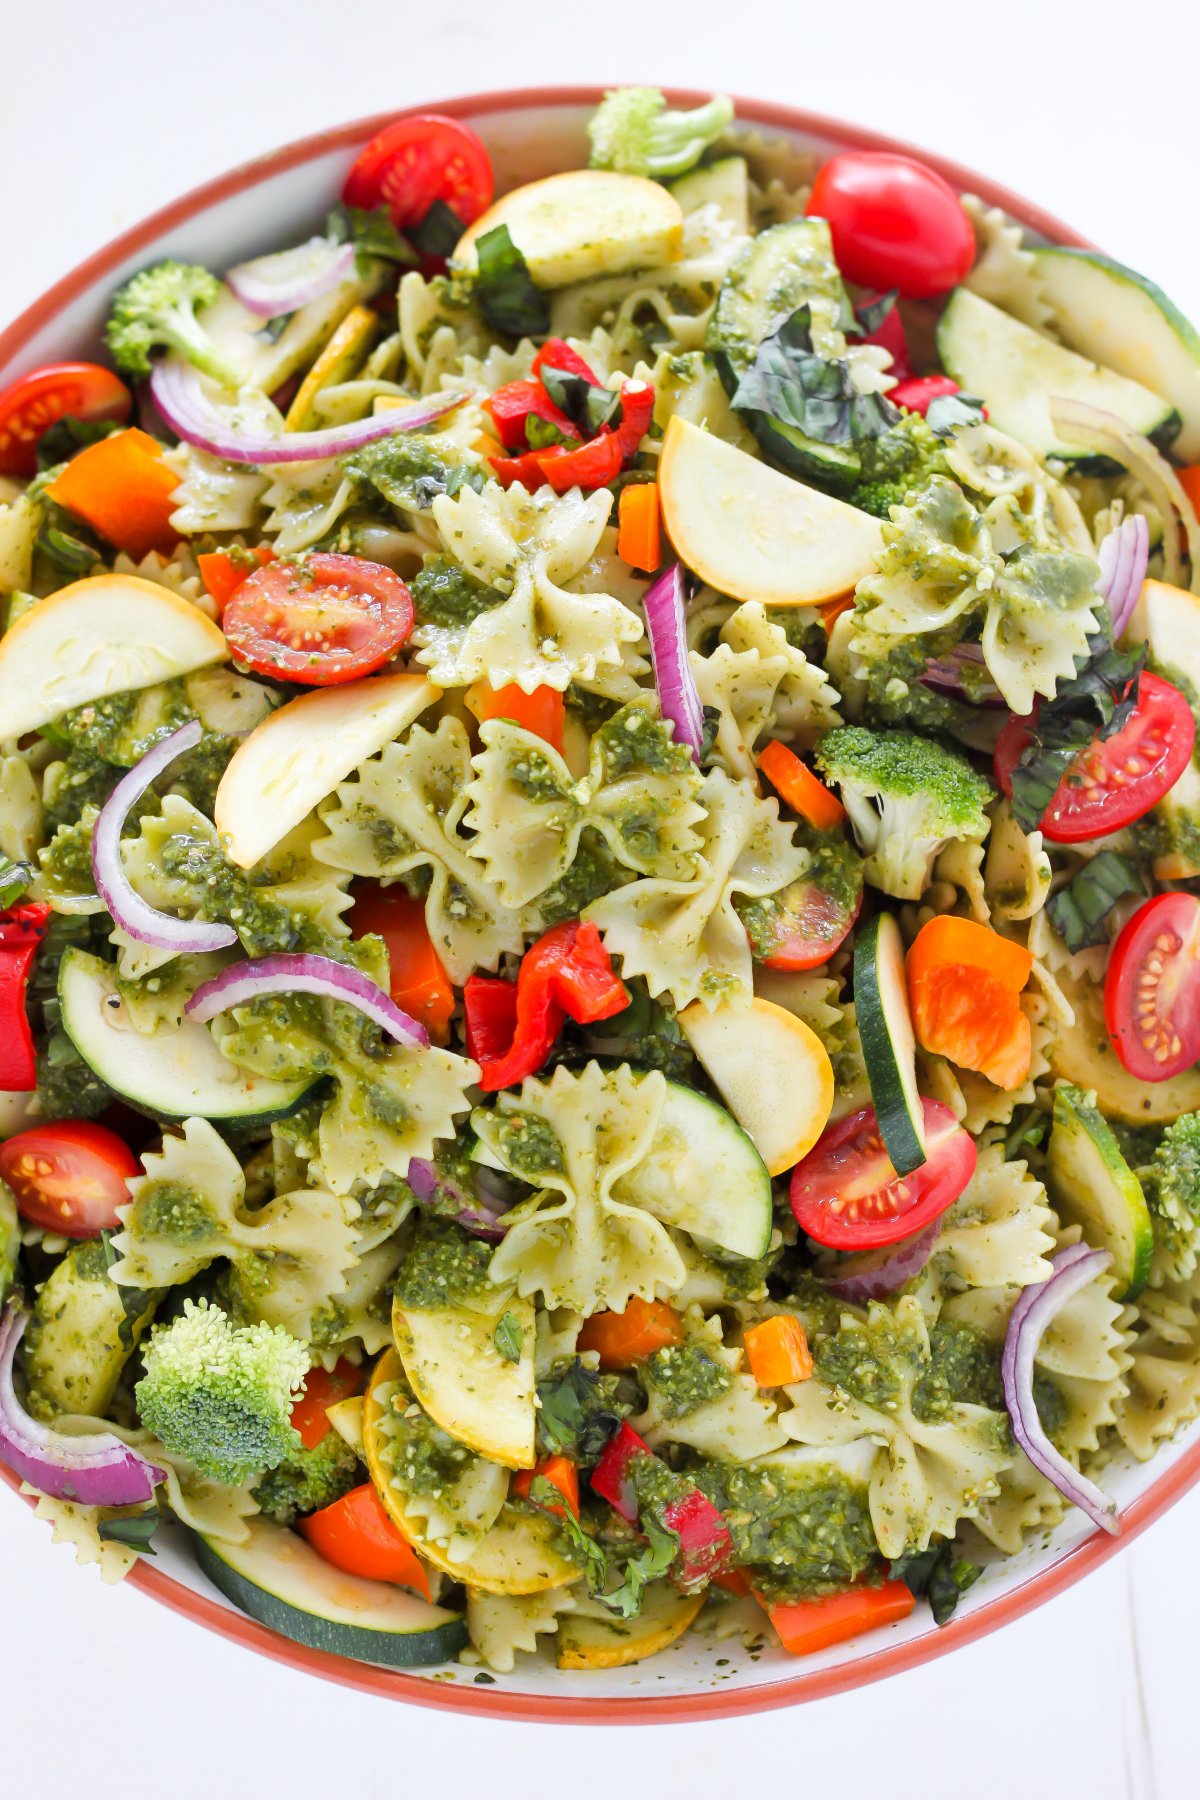 20-Minute Rainbow Veggie Pasta Salad - A Vegetarian Pasta Salad Recipe